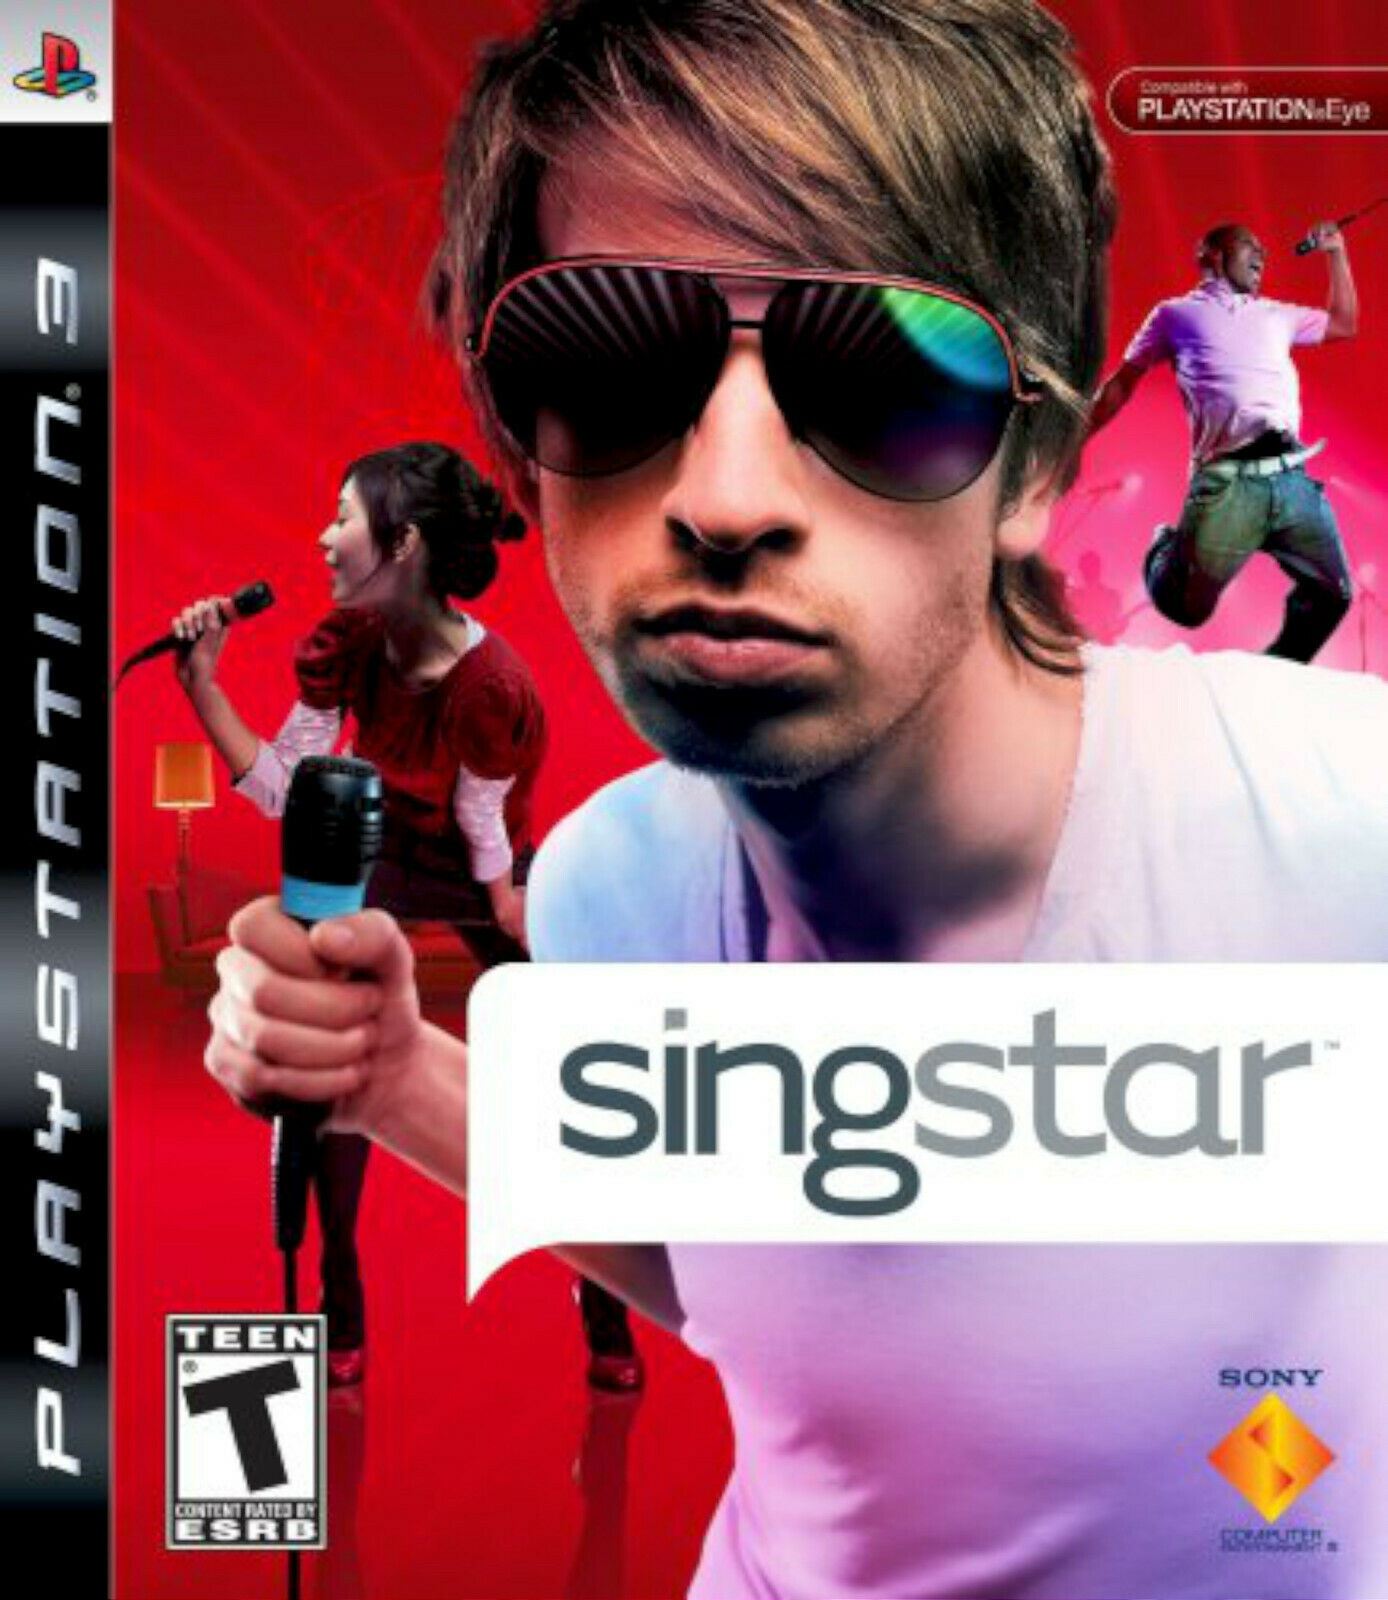 SingStar Sony PlayStation 3 Video Game PS3 Karaoke Music coldplay beck bowie [Used/Refurbished]